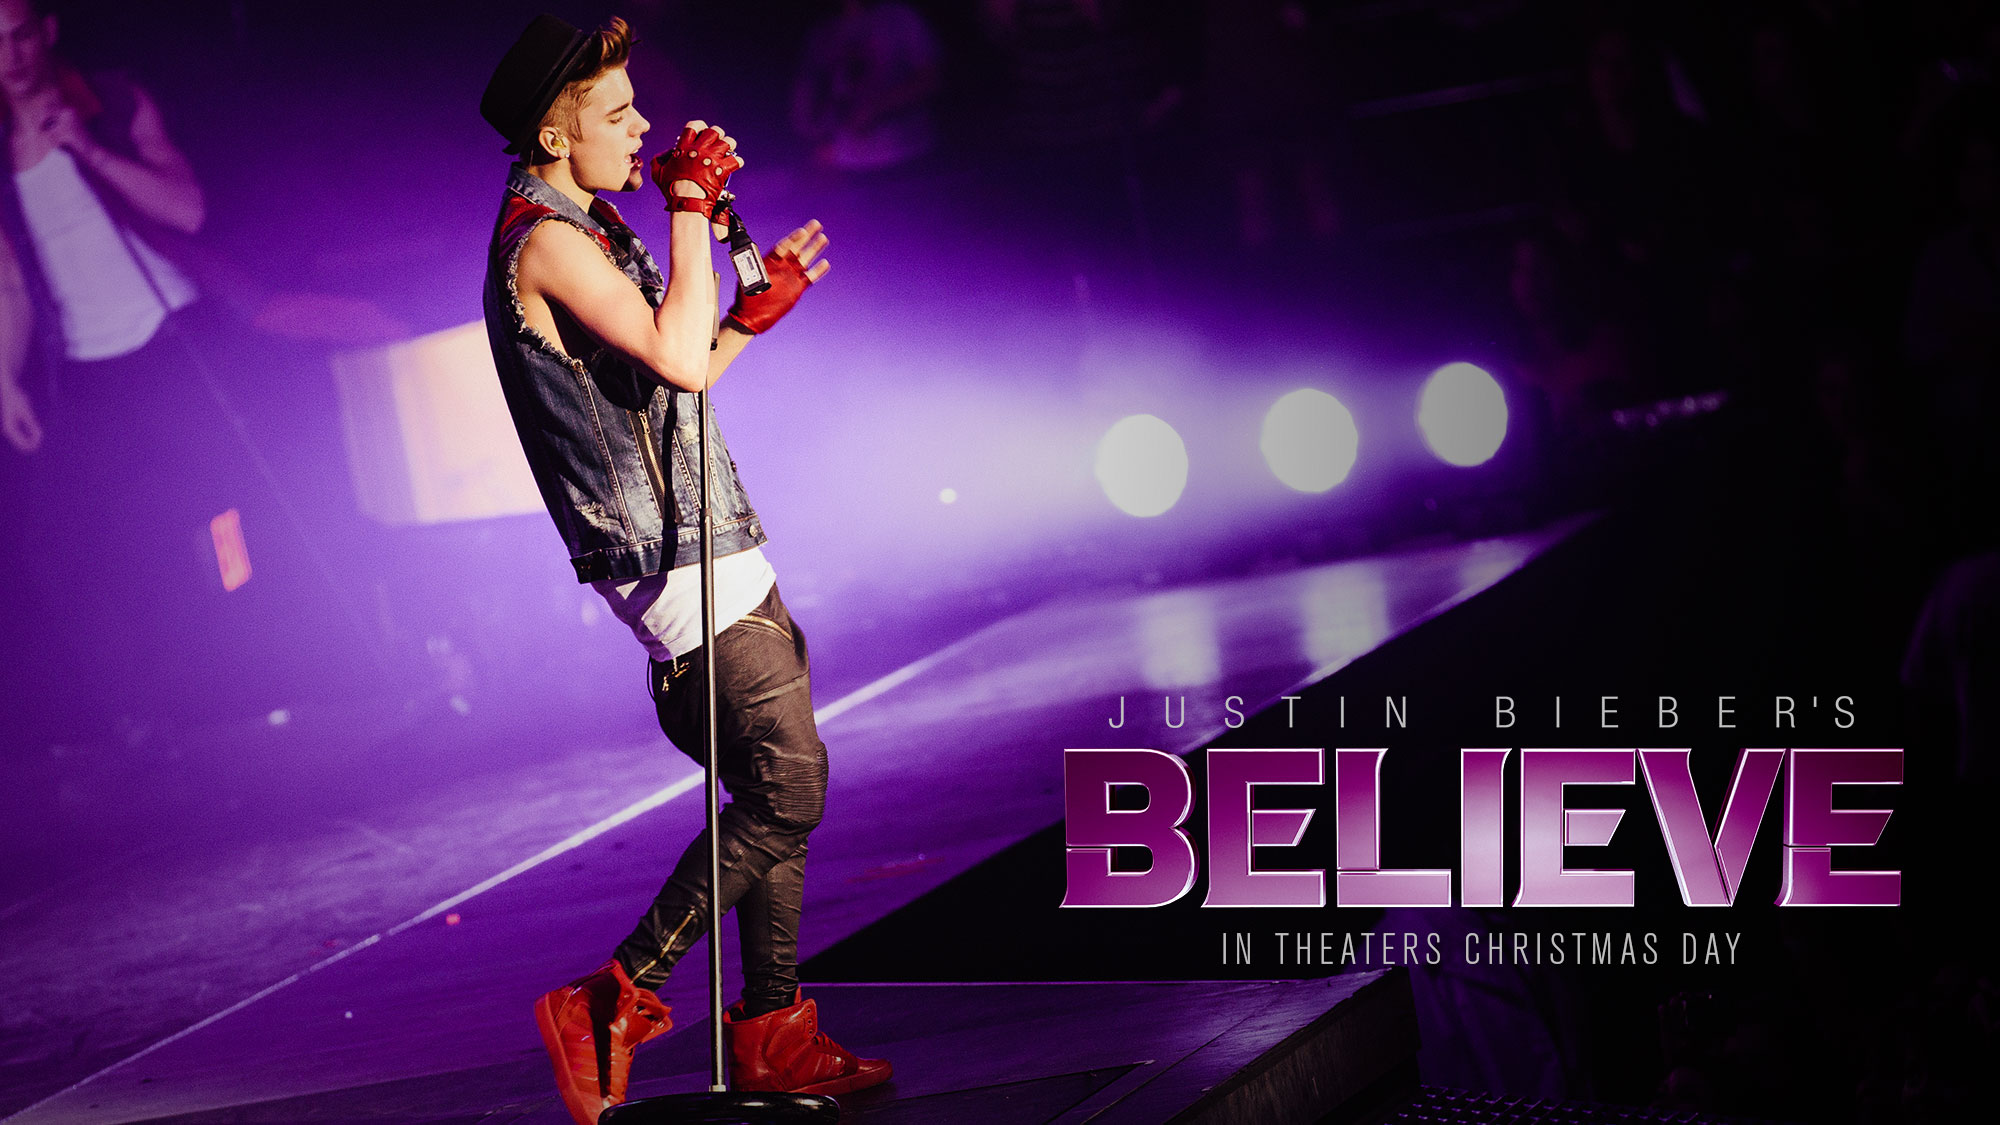 Image - Justin Bieber's Believe wallpaper 2.jpg | Justin Bieber Wiki | FANDOM powered ...